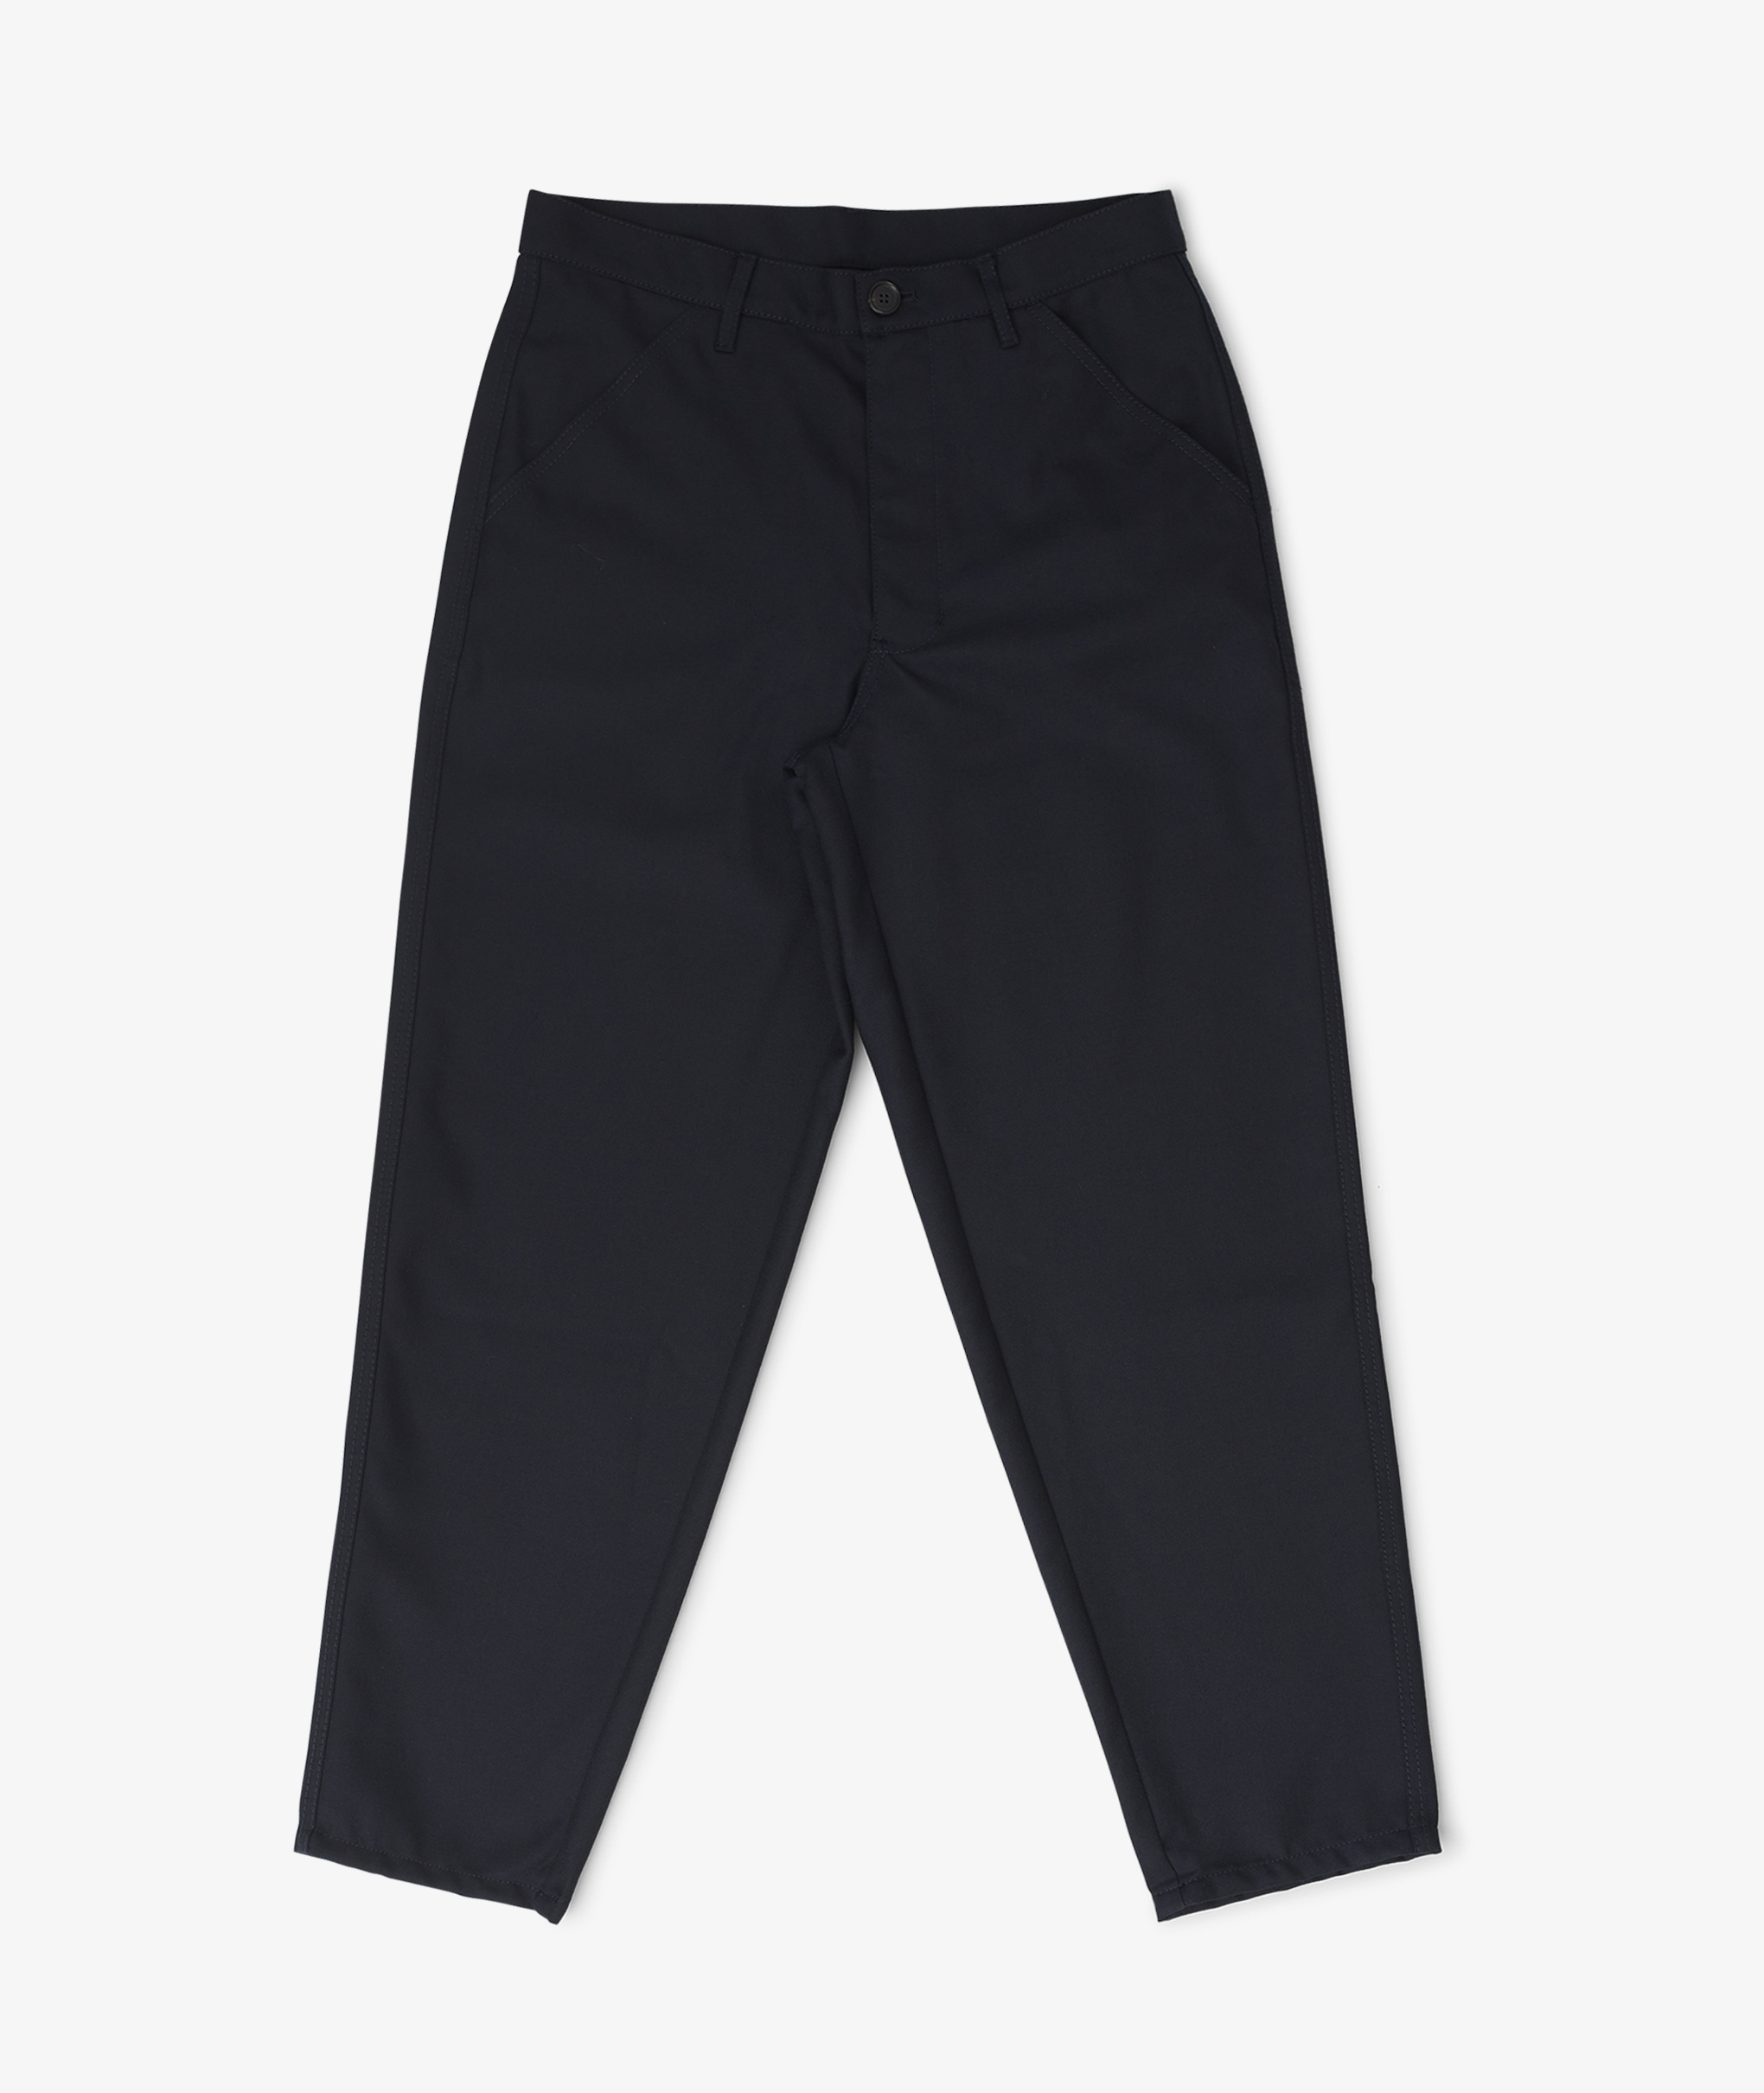 COMME des GARCONS Graphic Print Stretch Pants (Trousers) Black,White XS